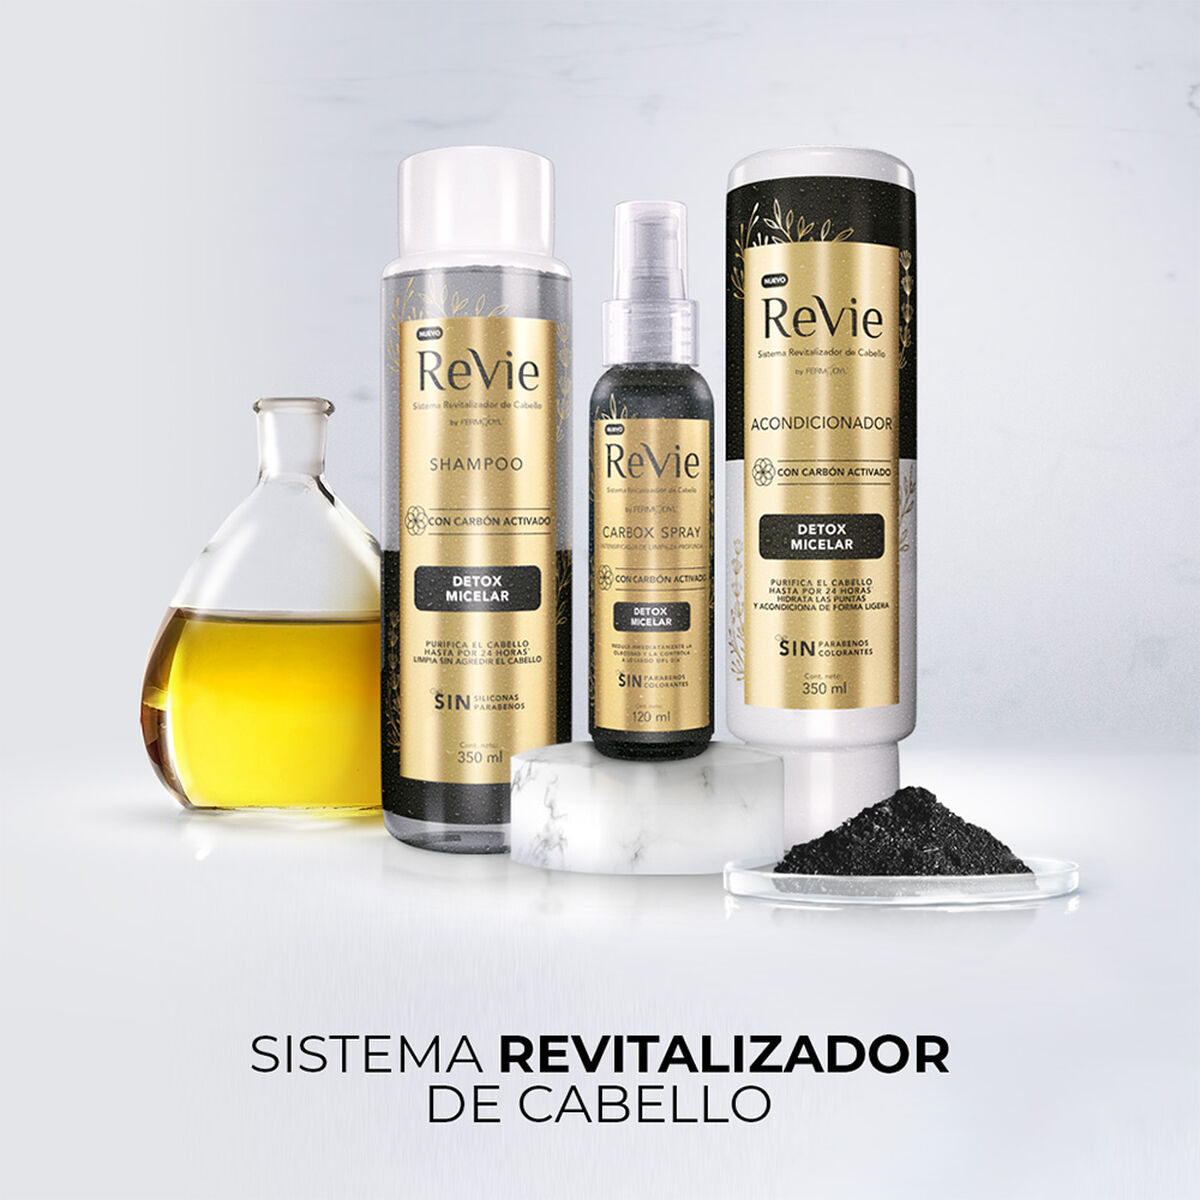 Revie 2 Shampoo + Acondicionador Detox Carbón